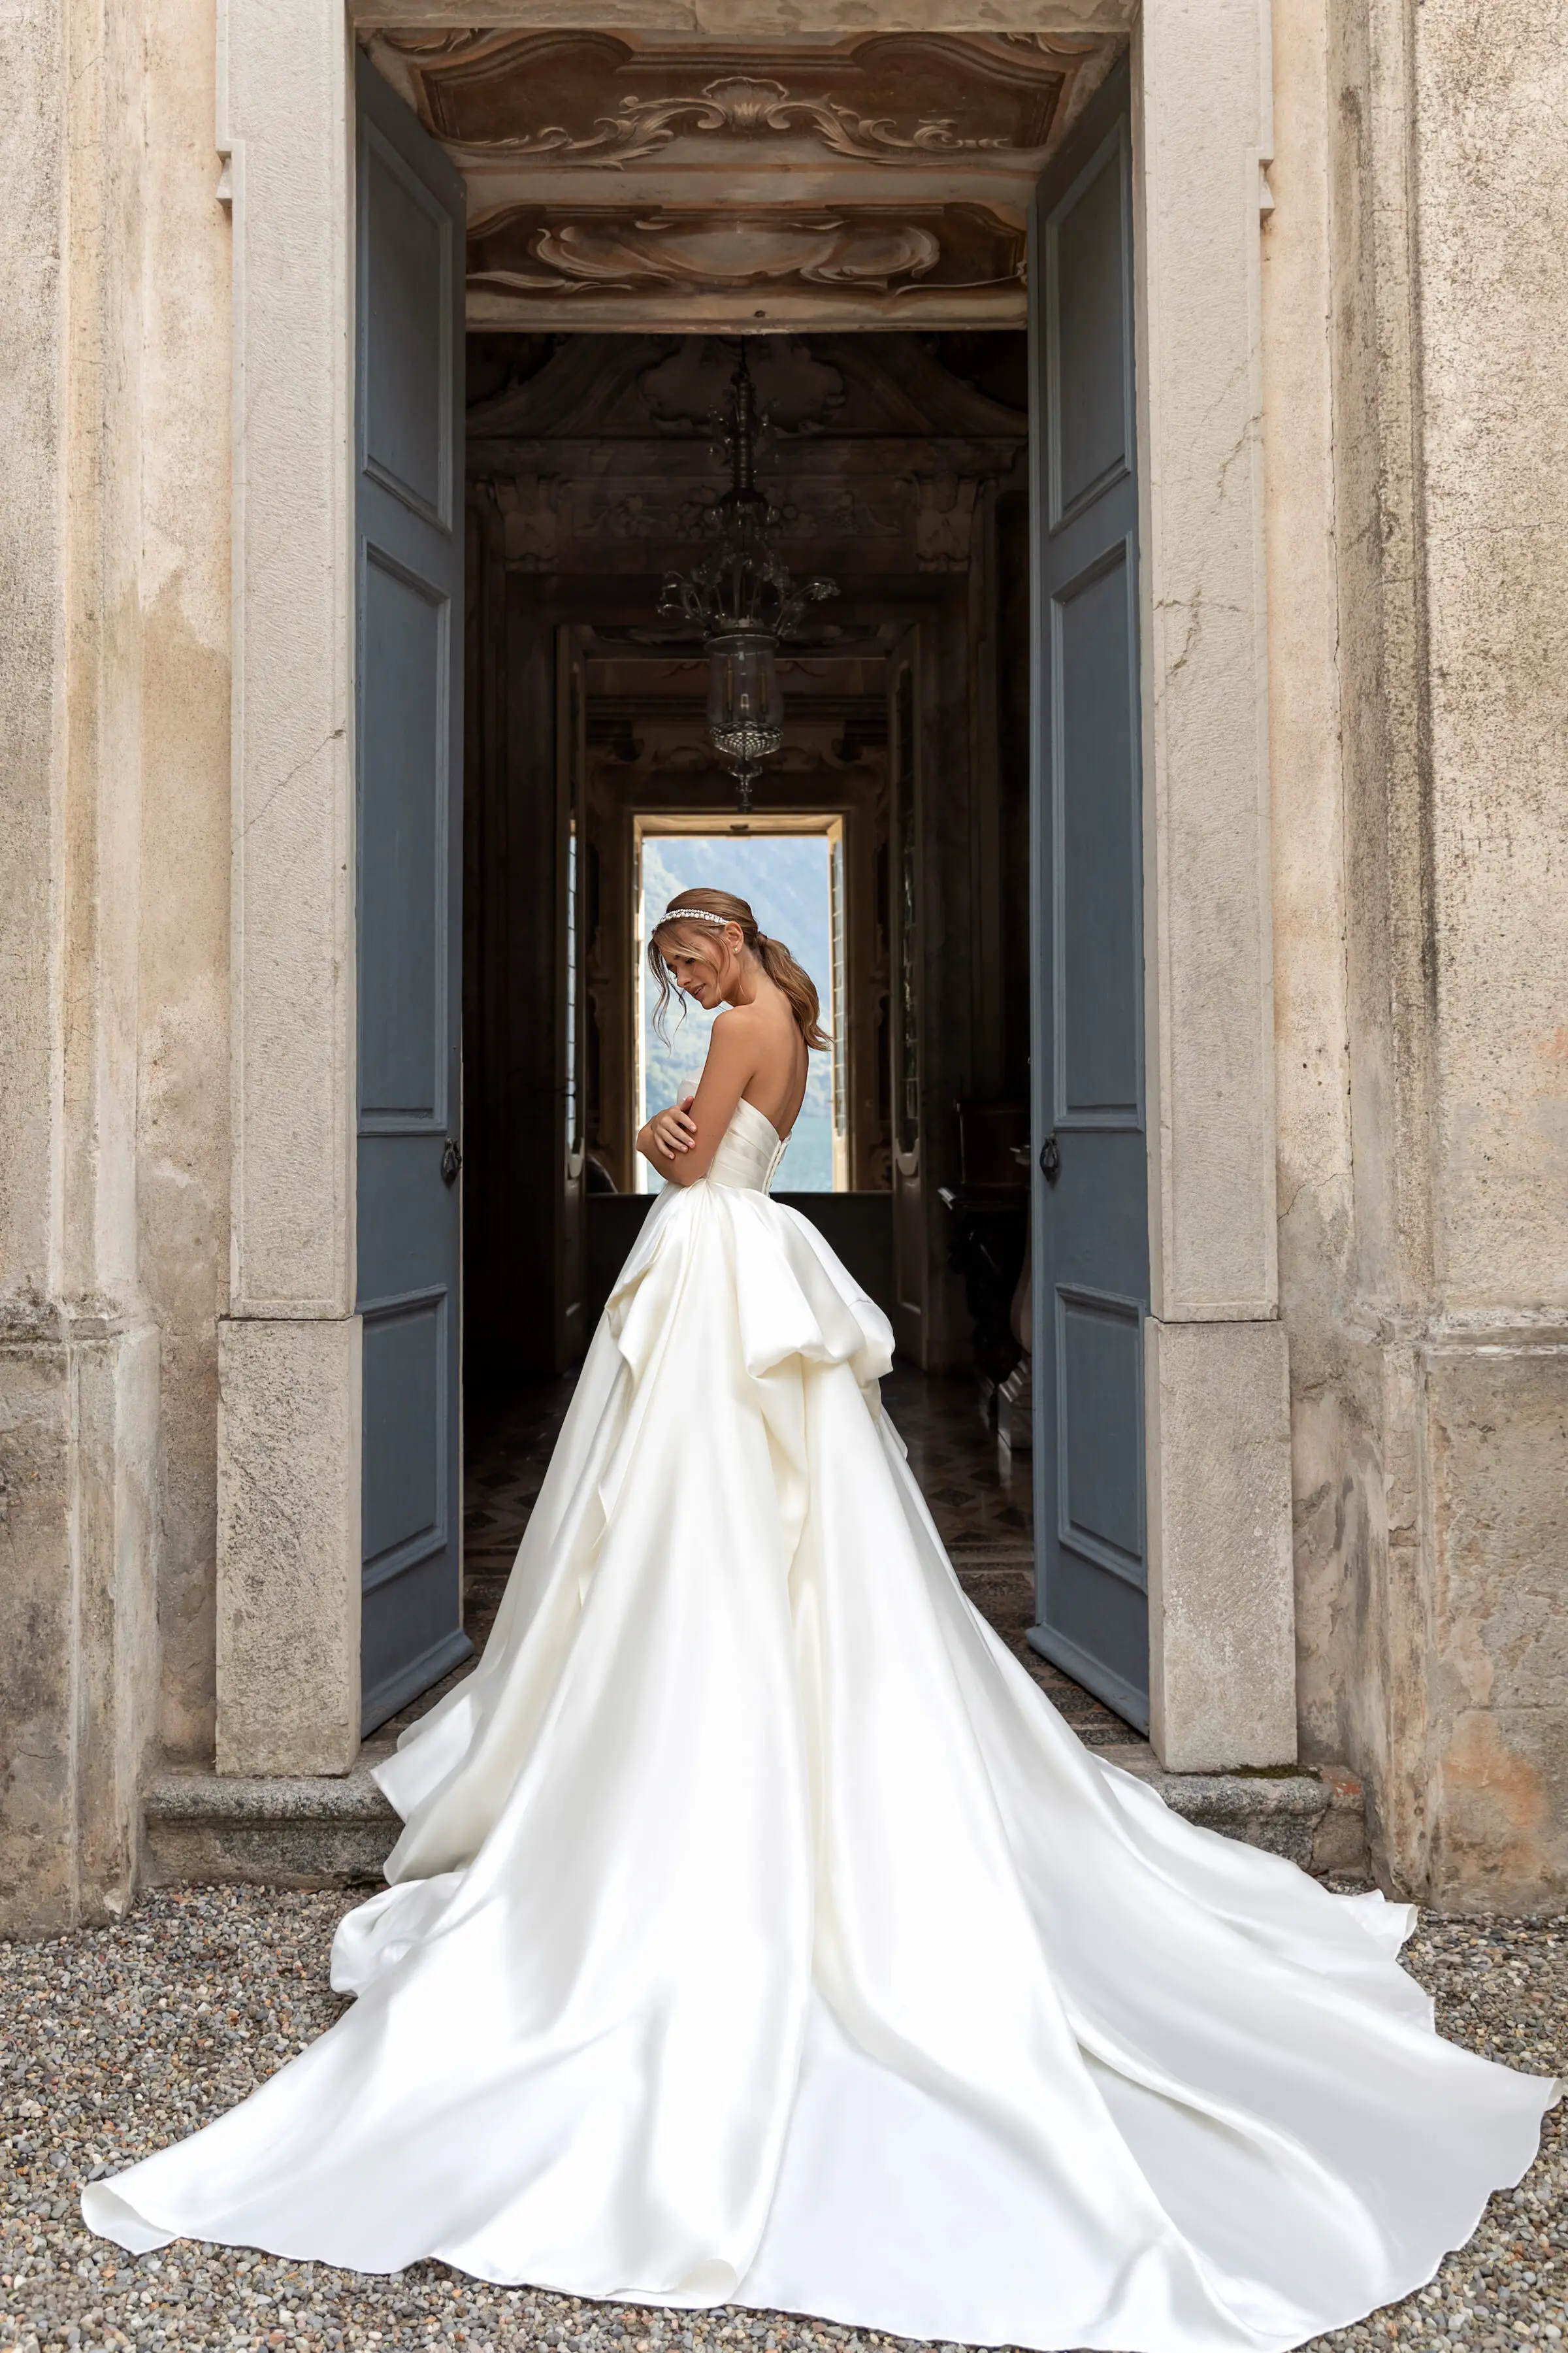 Simple Ball gown wedding dress - Pollardi 2023 -Dignity